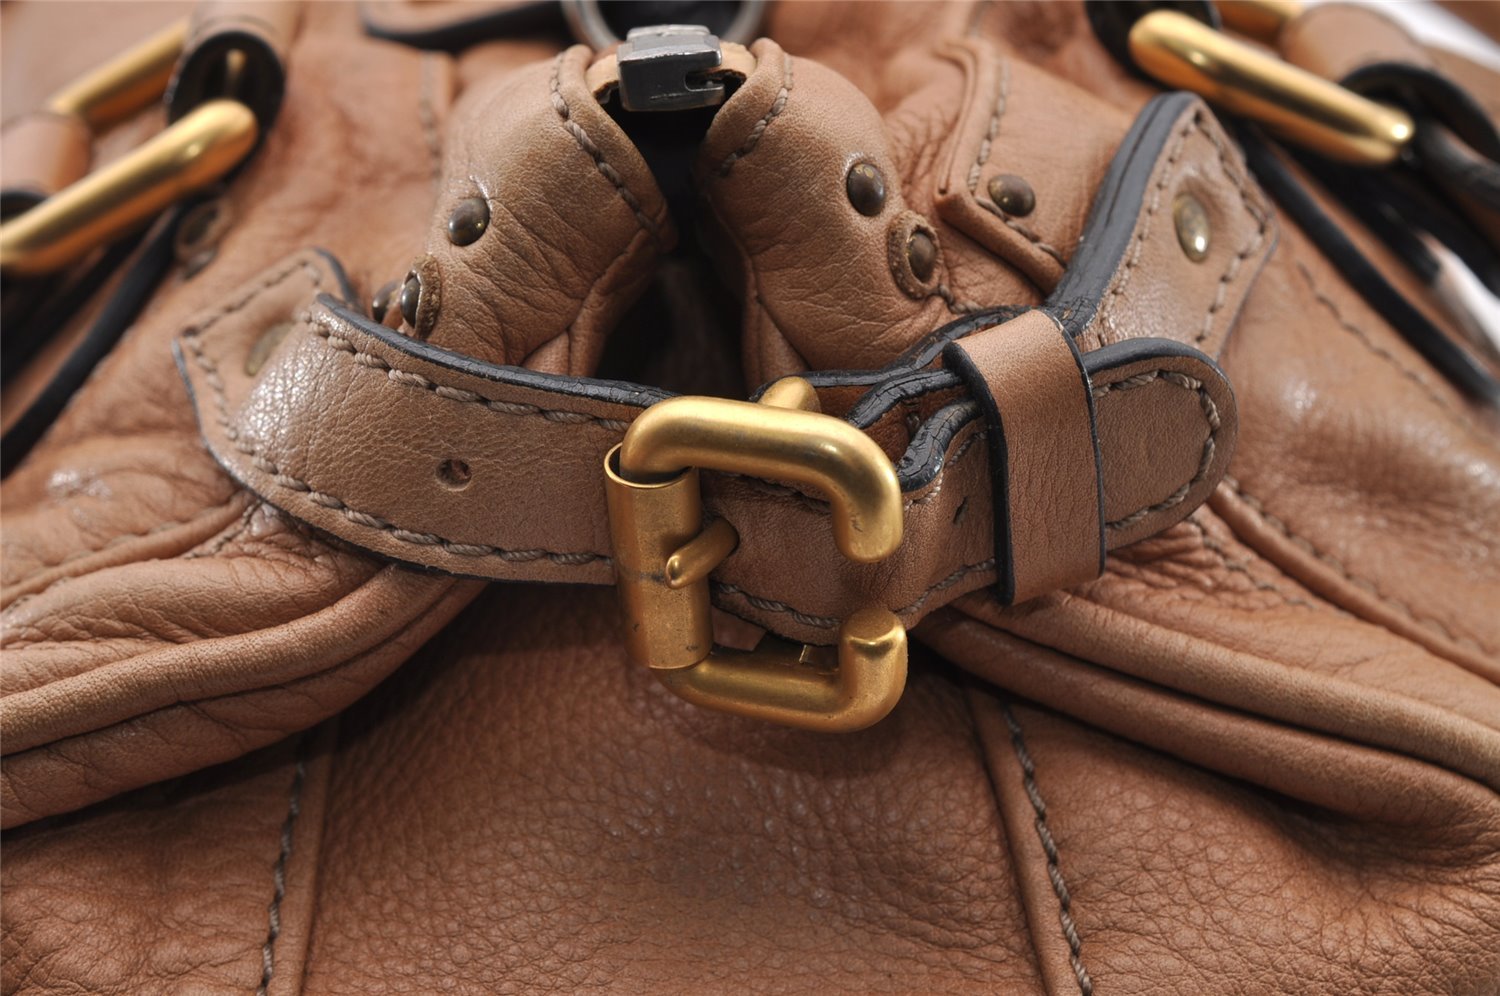 Authentic Chloe Paddington Vintage Leather Shoulder Hand Bag Purse Brown 2532I